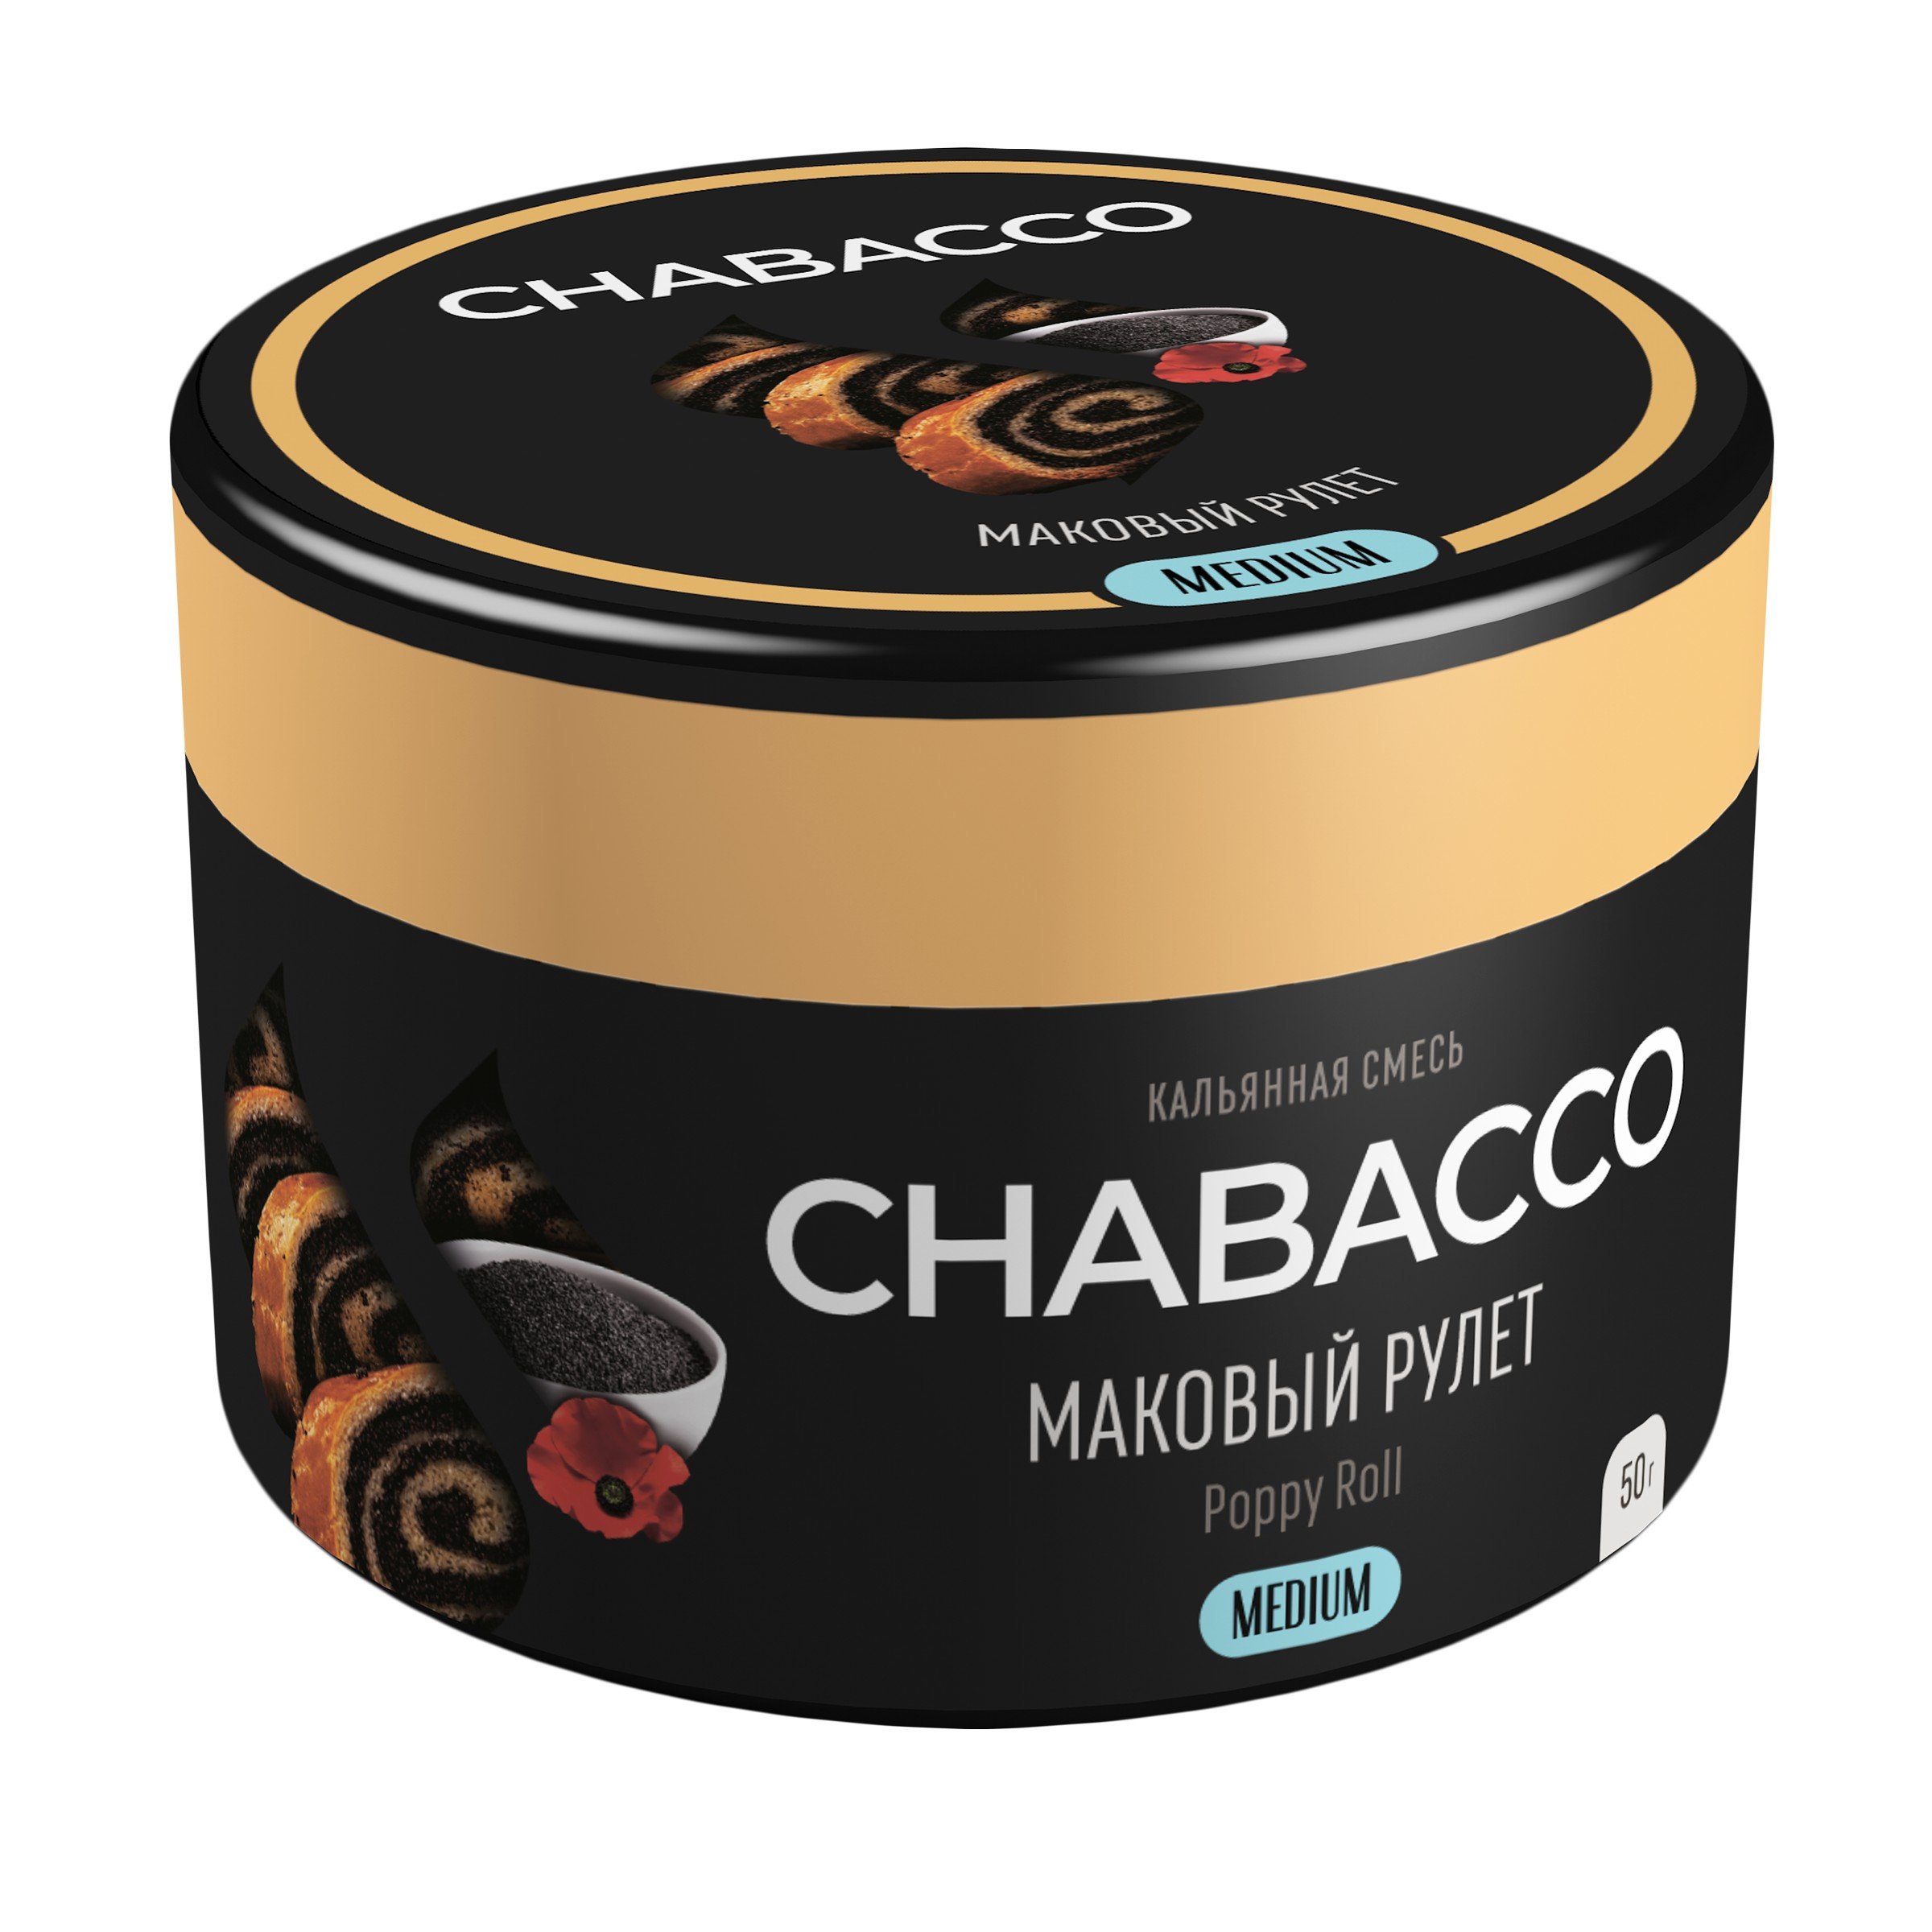 Chabacco - medium - Poppy Roll ( маковый рулет ) - 50 g - new 2023